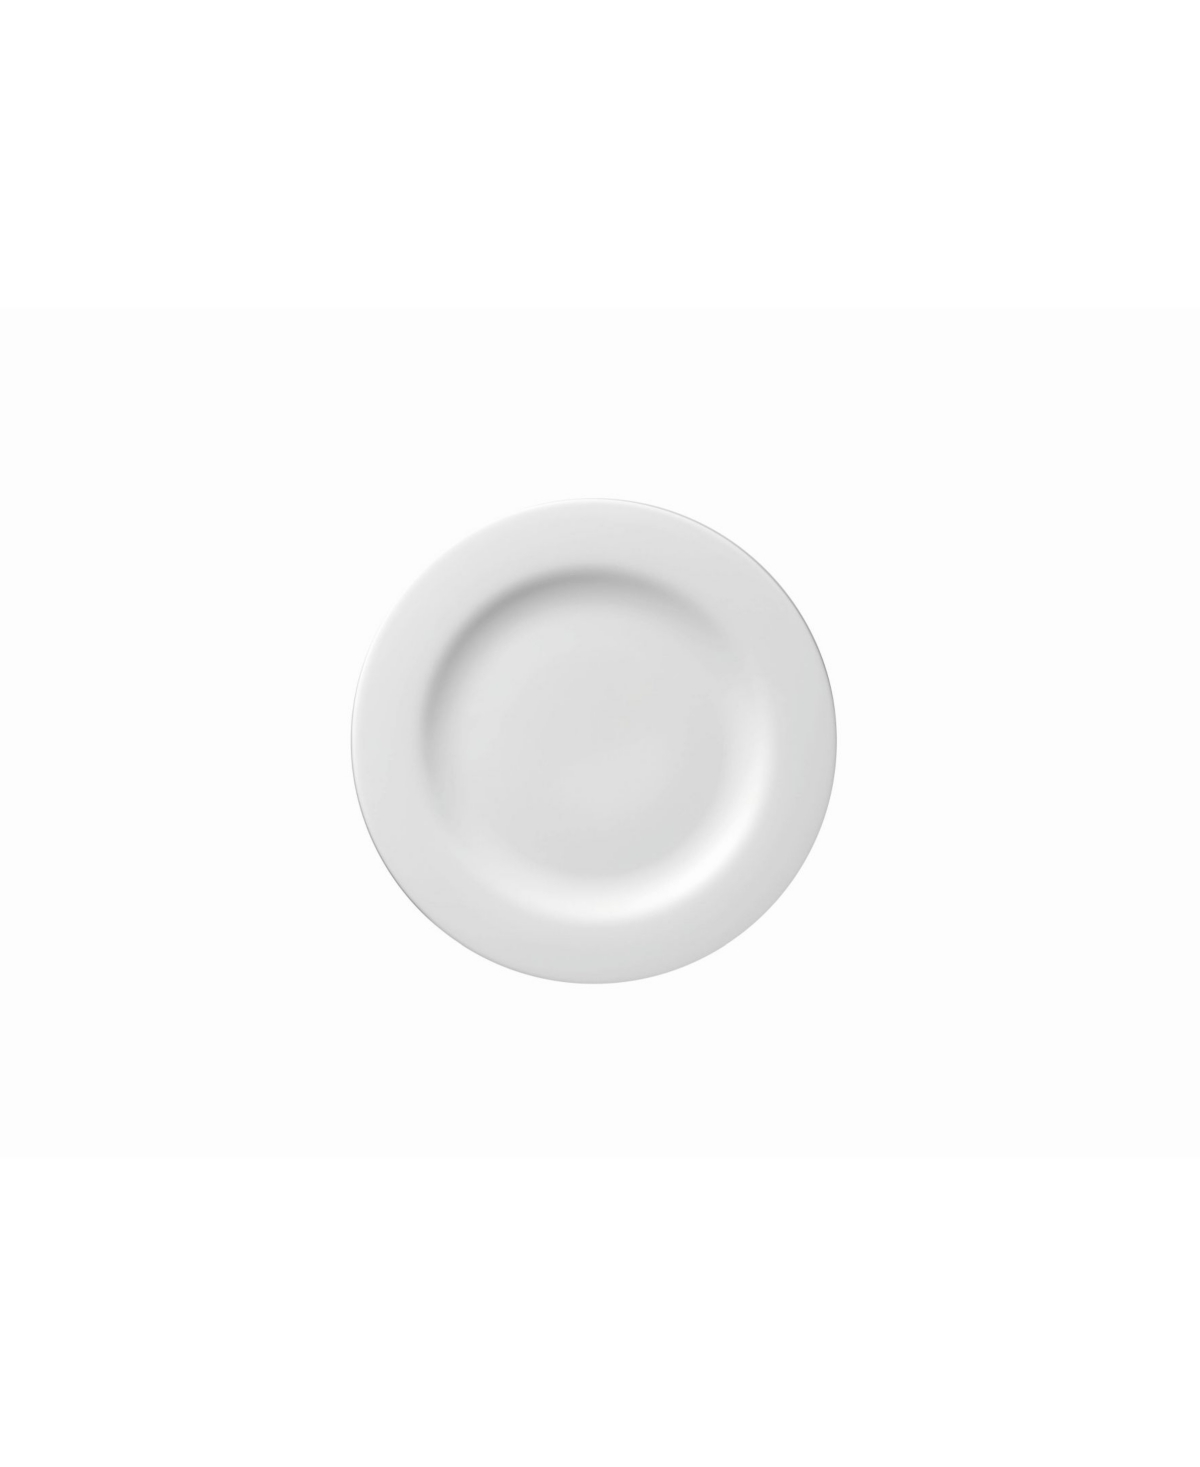 Moon White Bread & Butter Plate - White